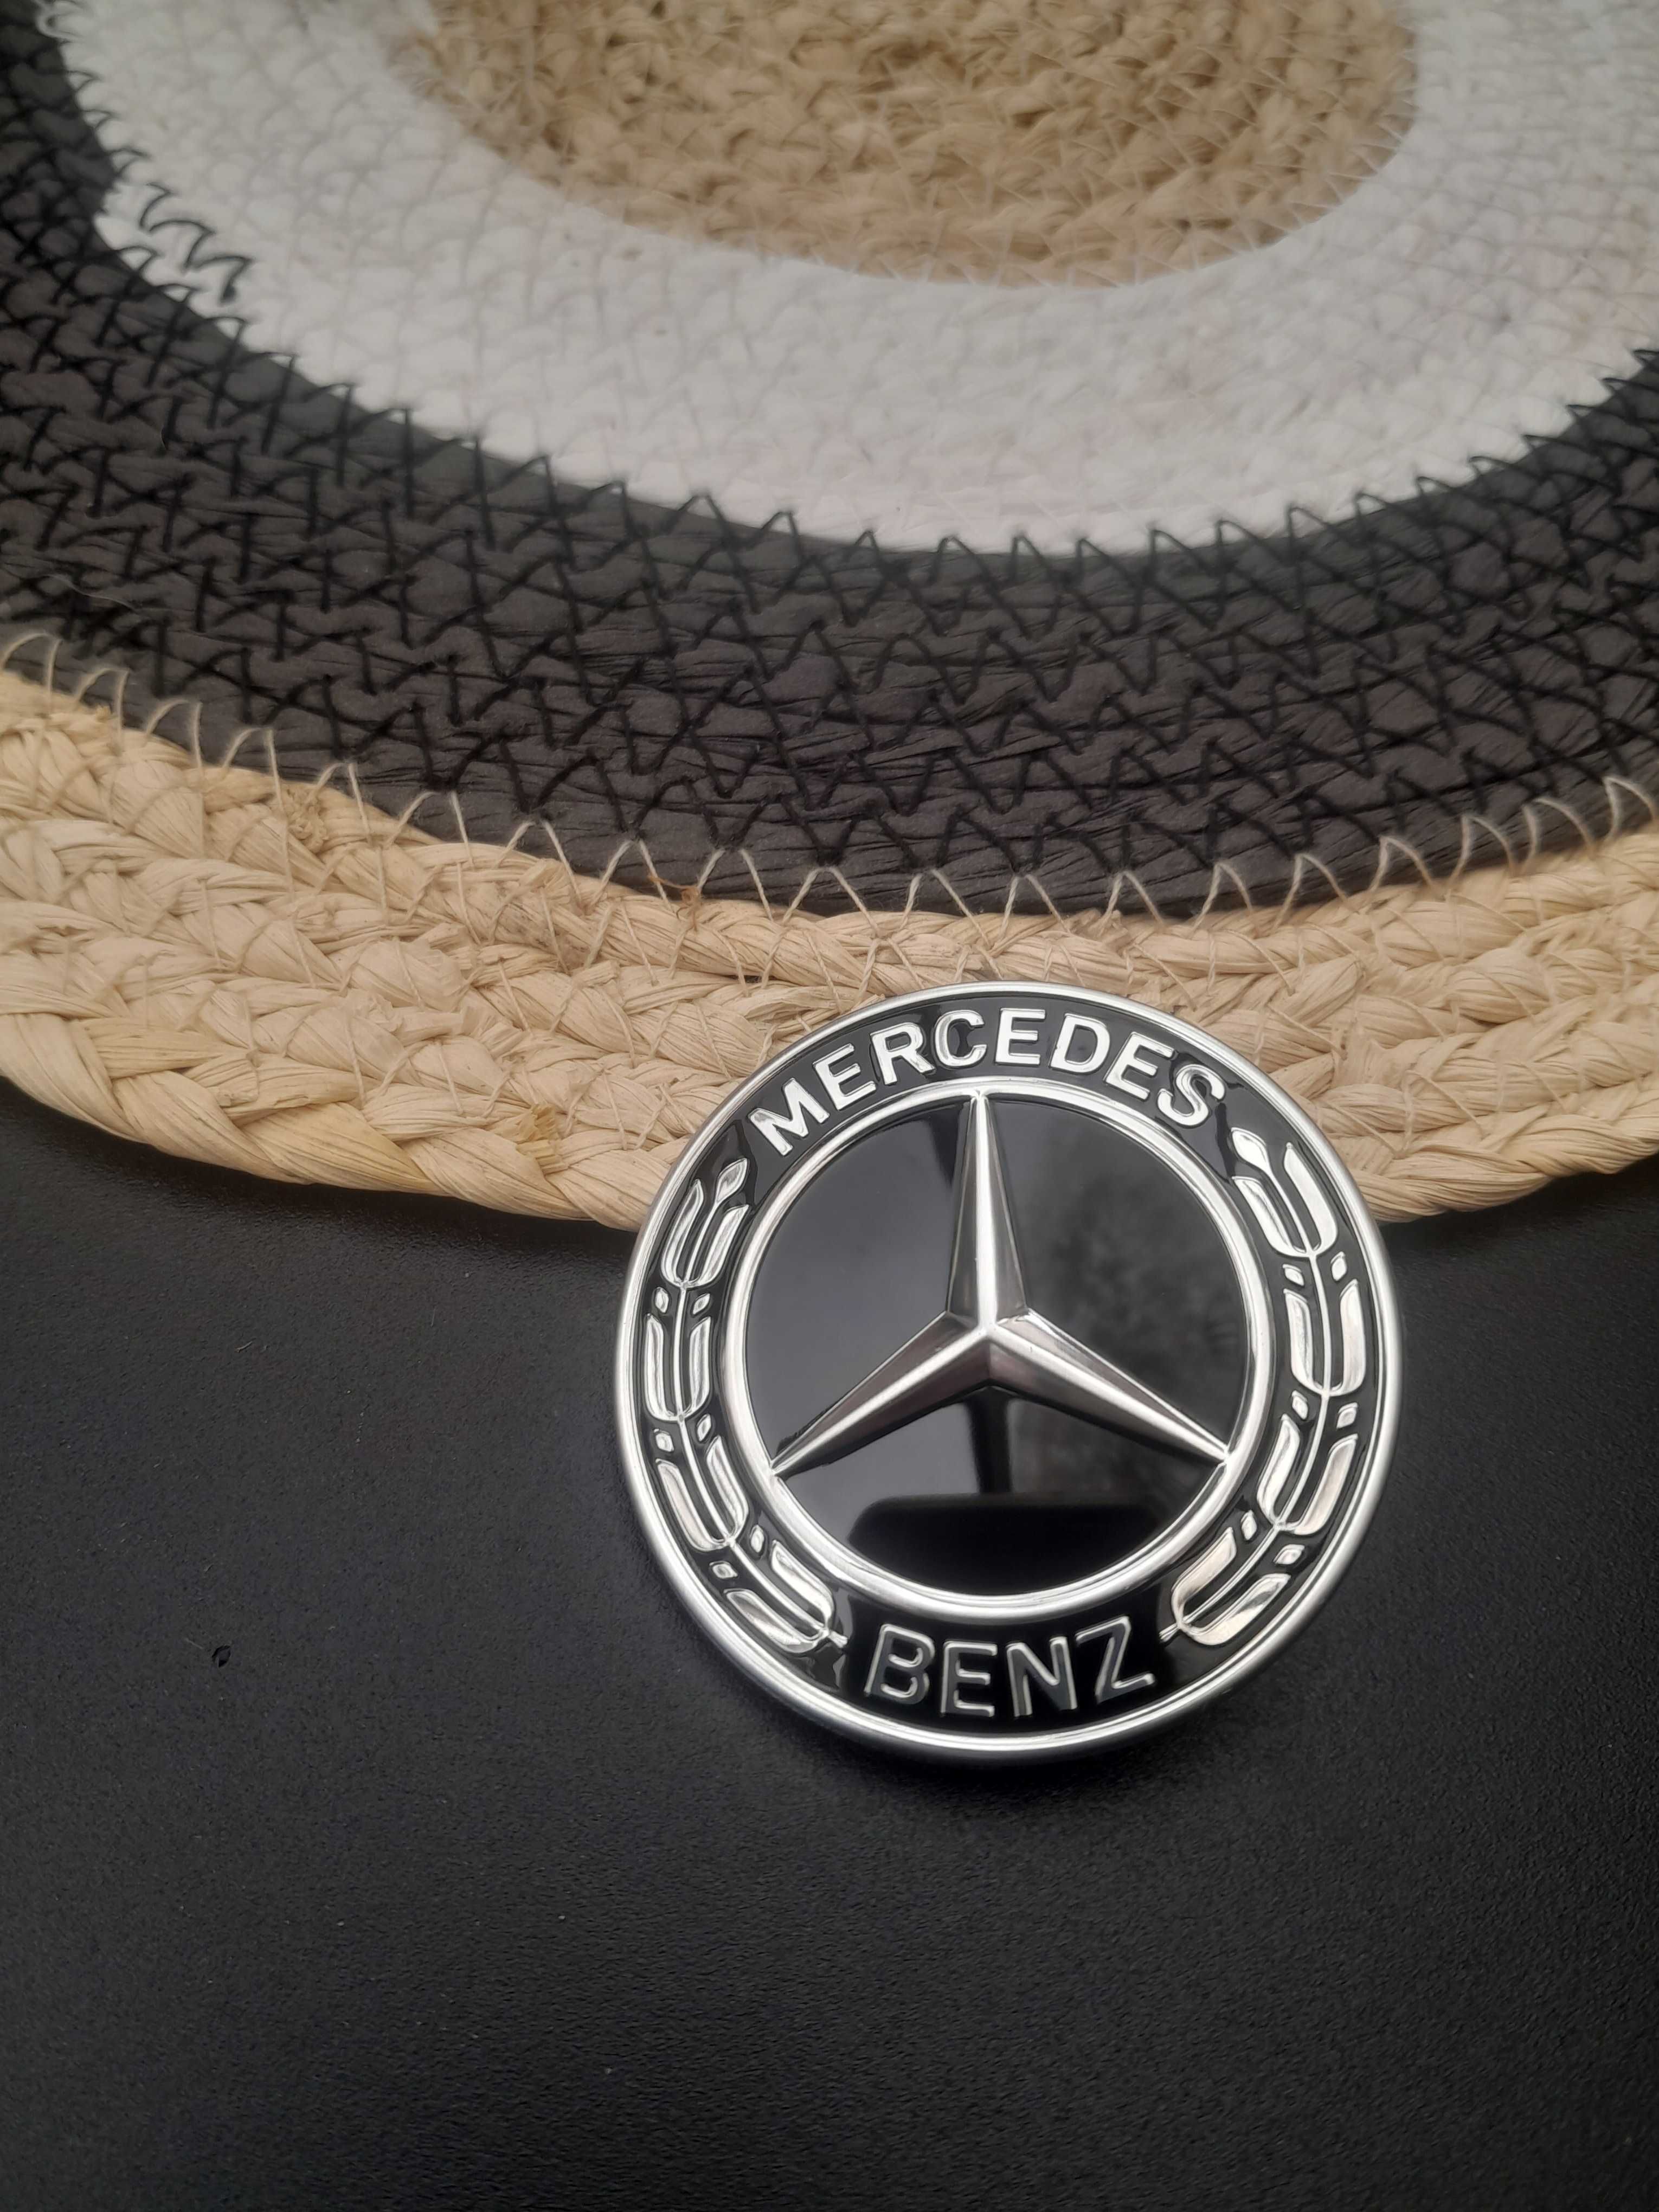 Emblemat Mercedes oryginalny nowy